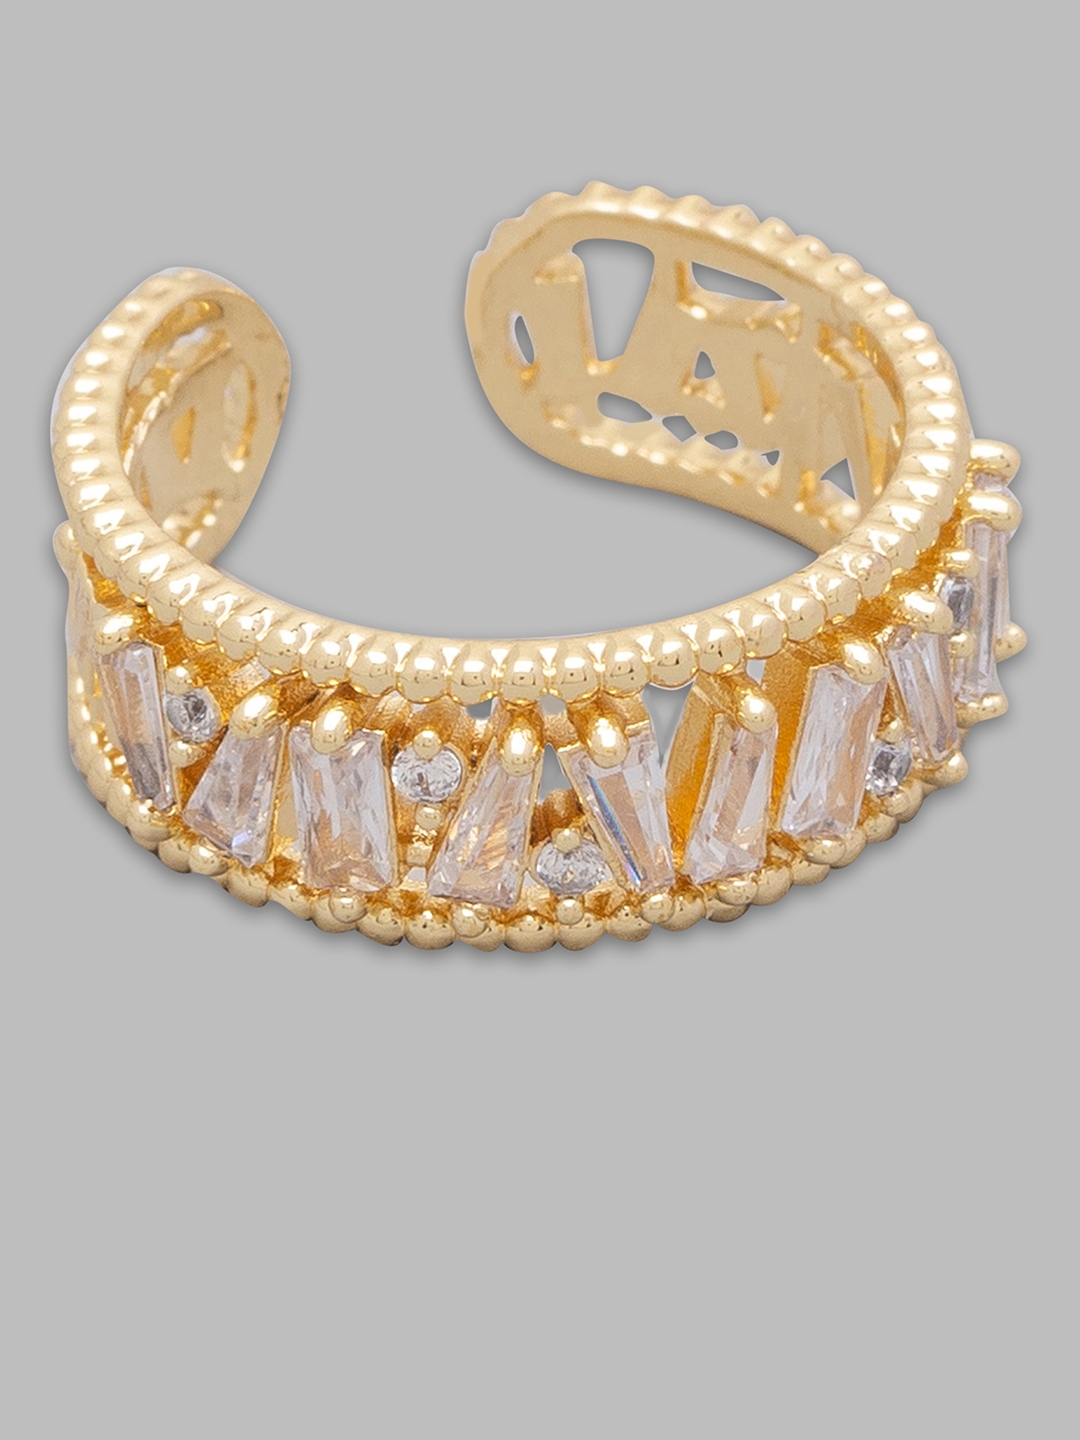 globus | Globus Gold Plated Ring